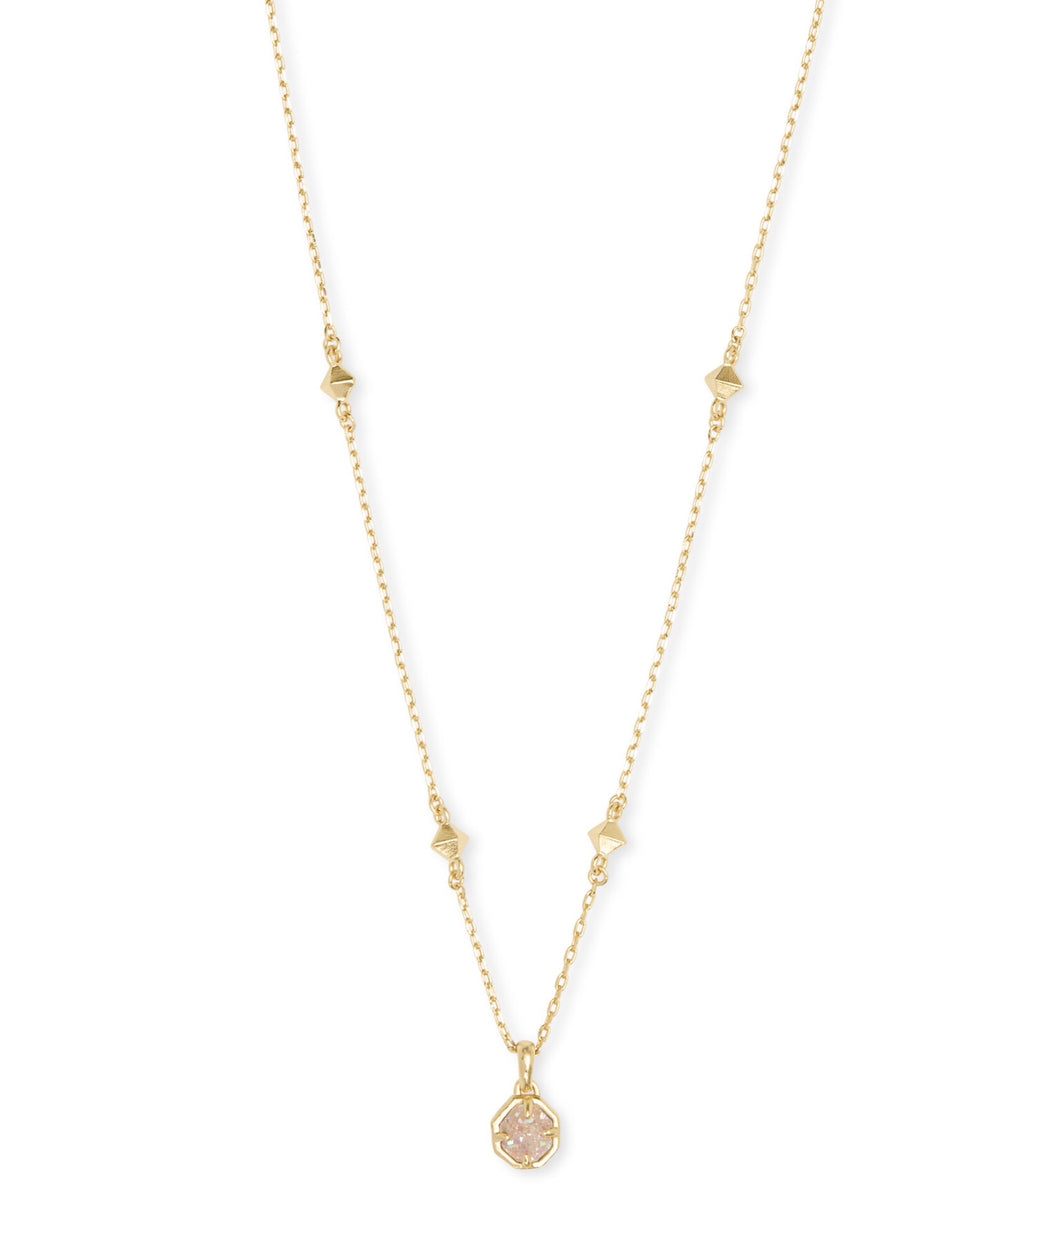 Kendra Scott: Nola Short Gold Iridescent Drusy Necklace - The Vogue Boutique